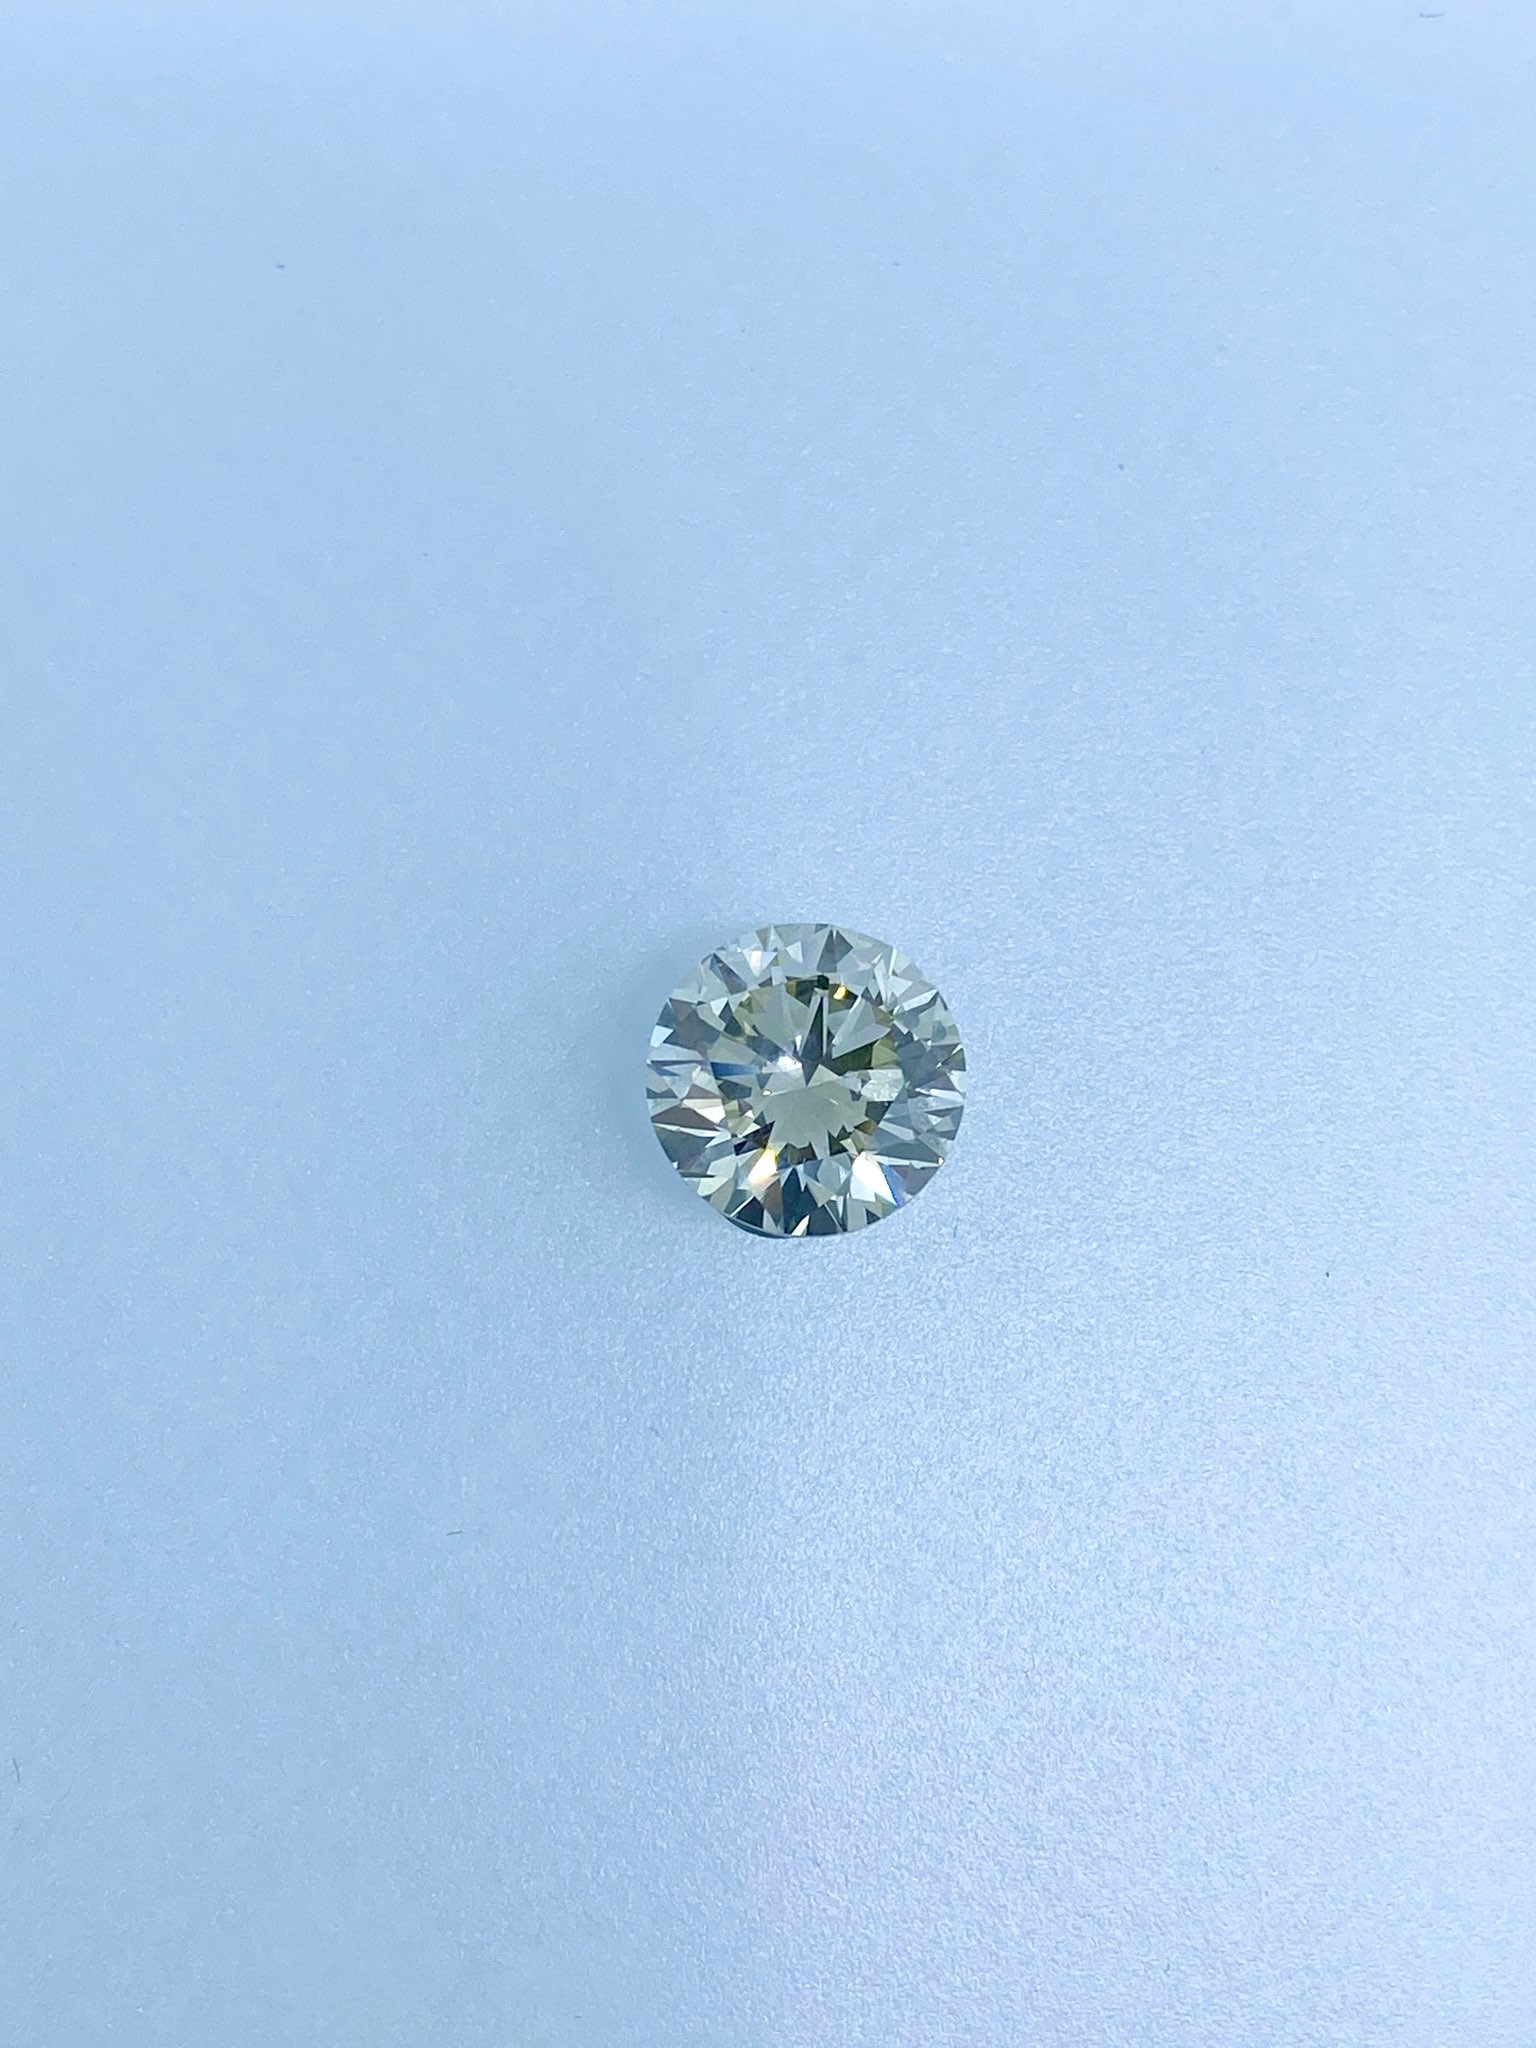 Off-White Round Diamond - 4.36 carats